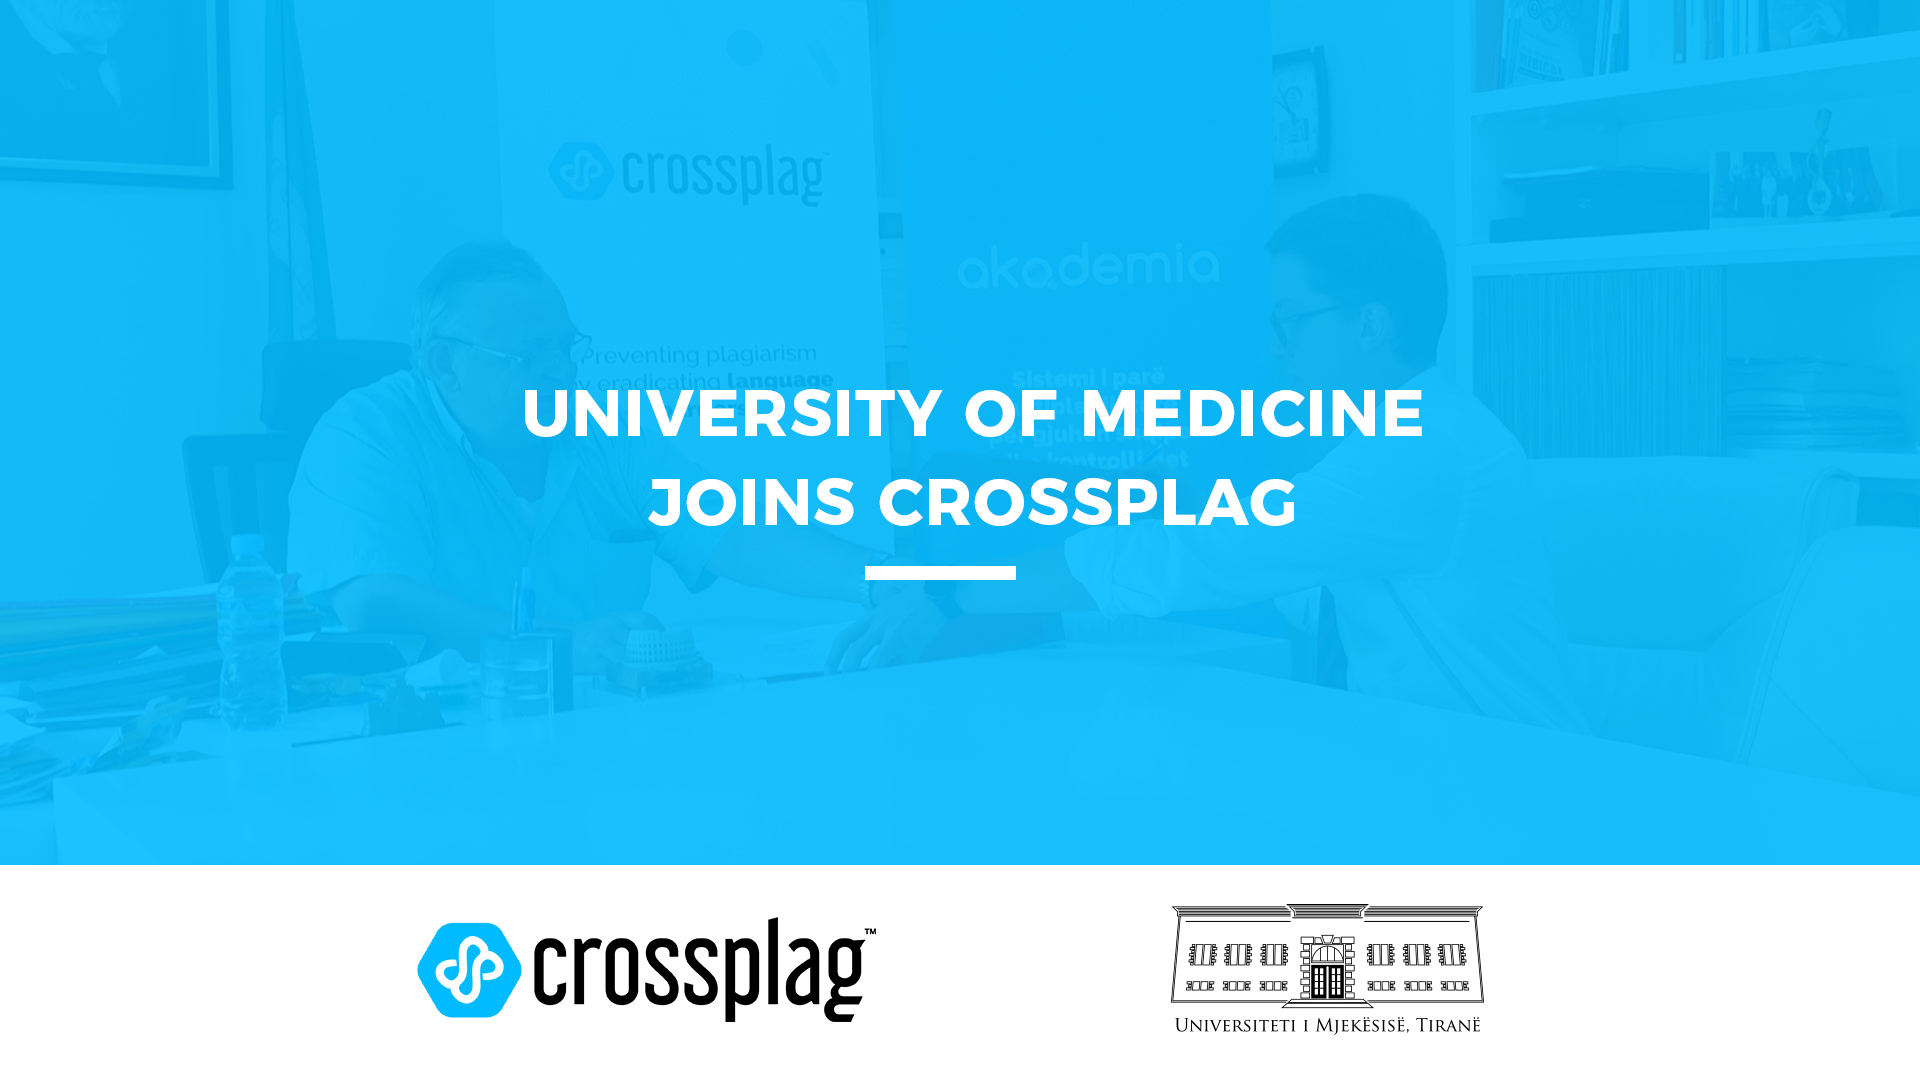 The University of Medicine - TIRANA joins Crossplag